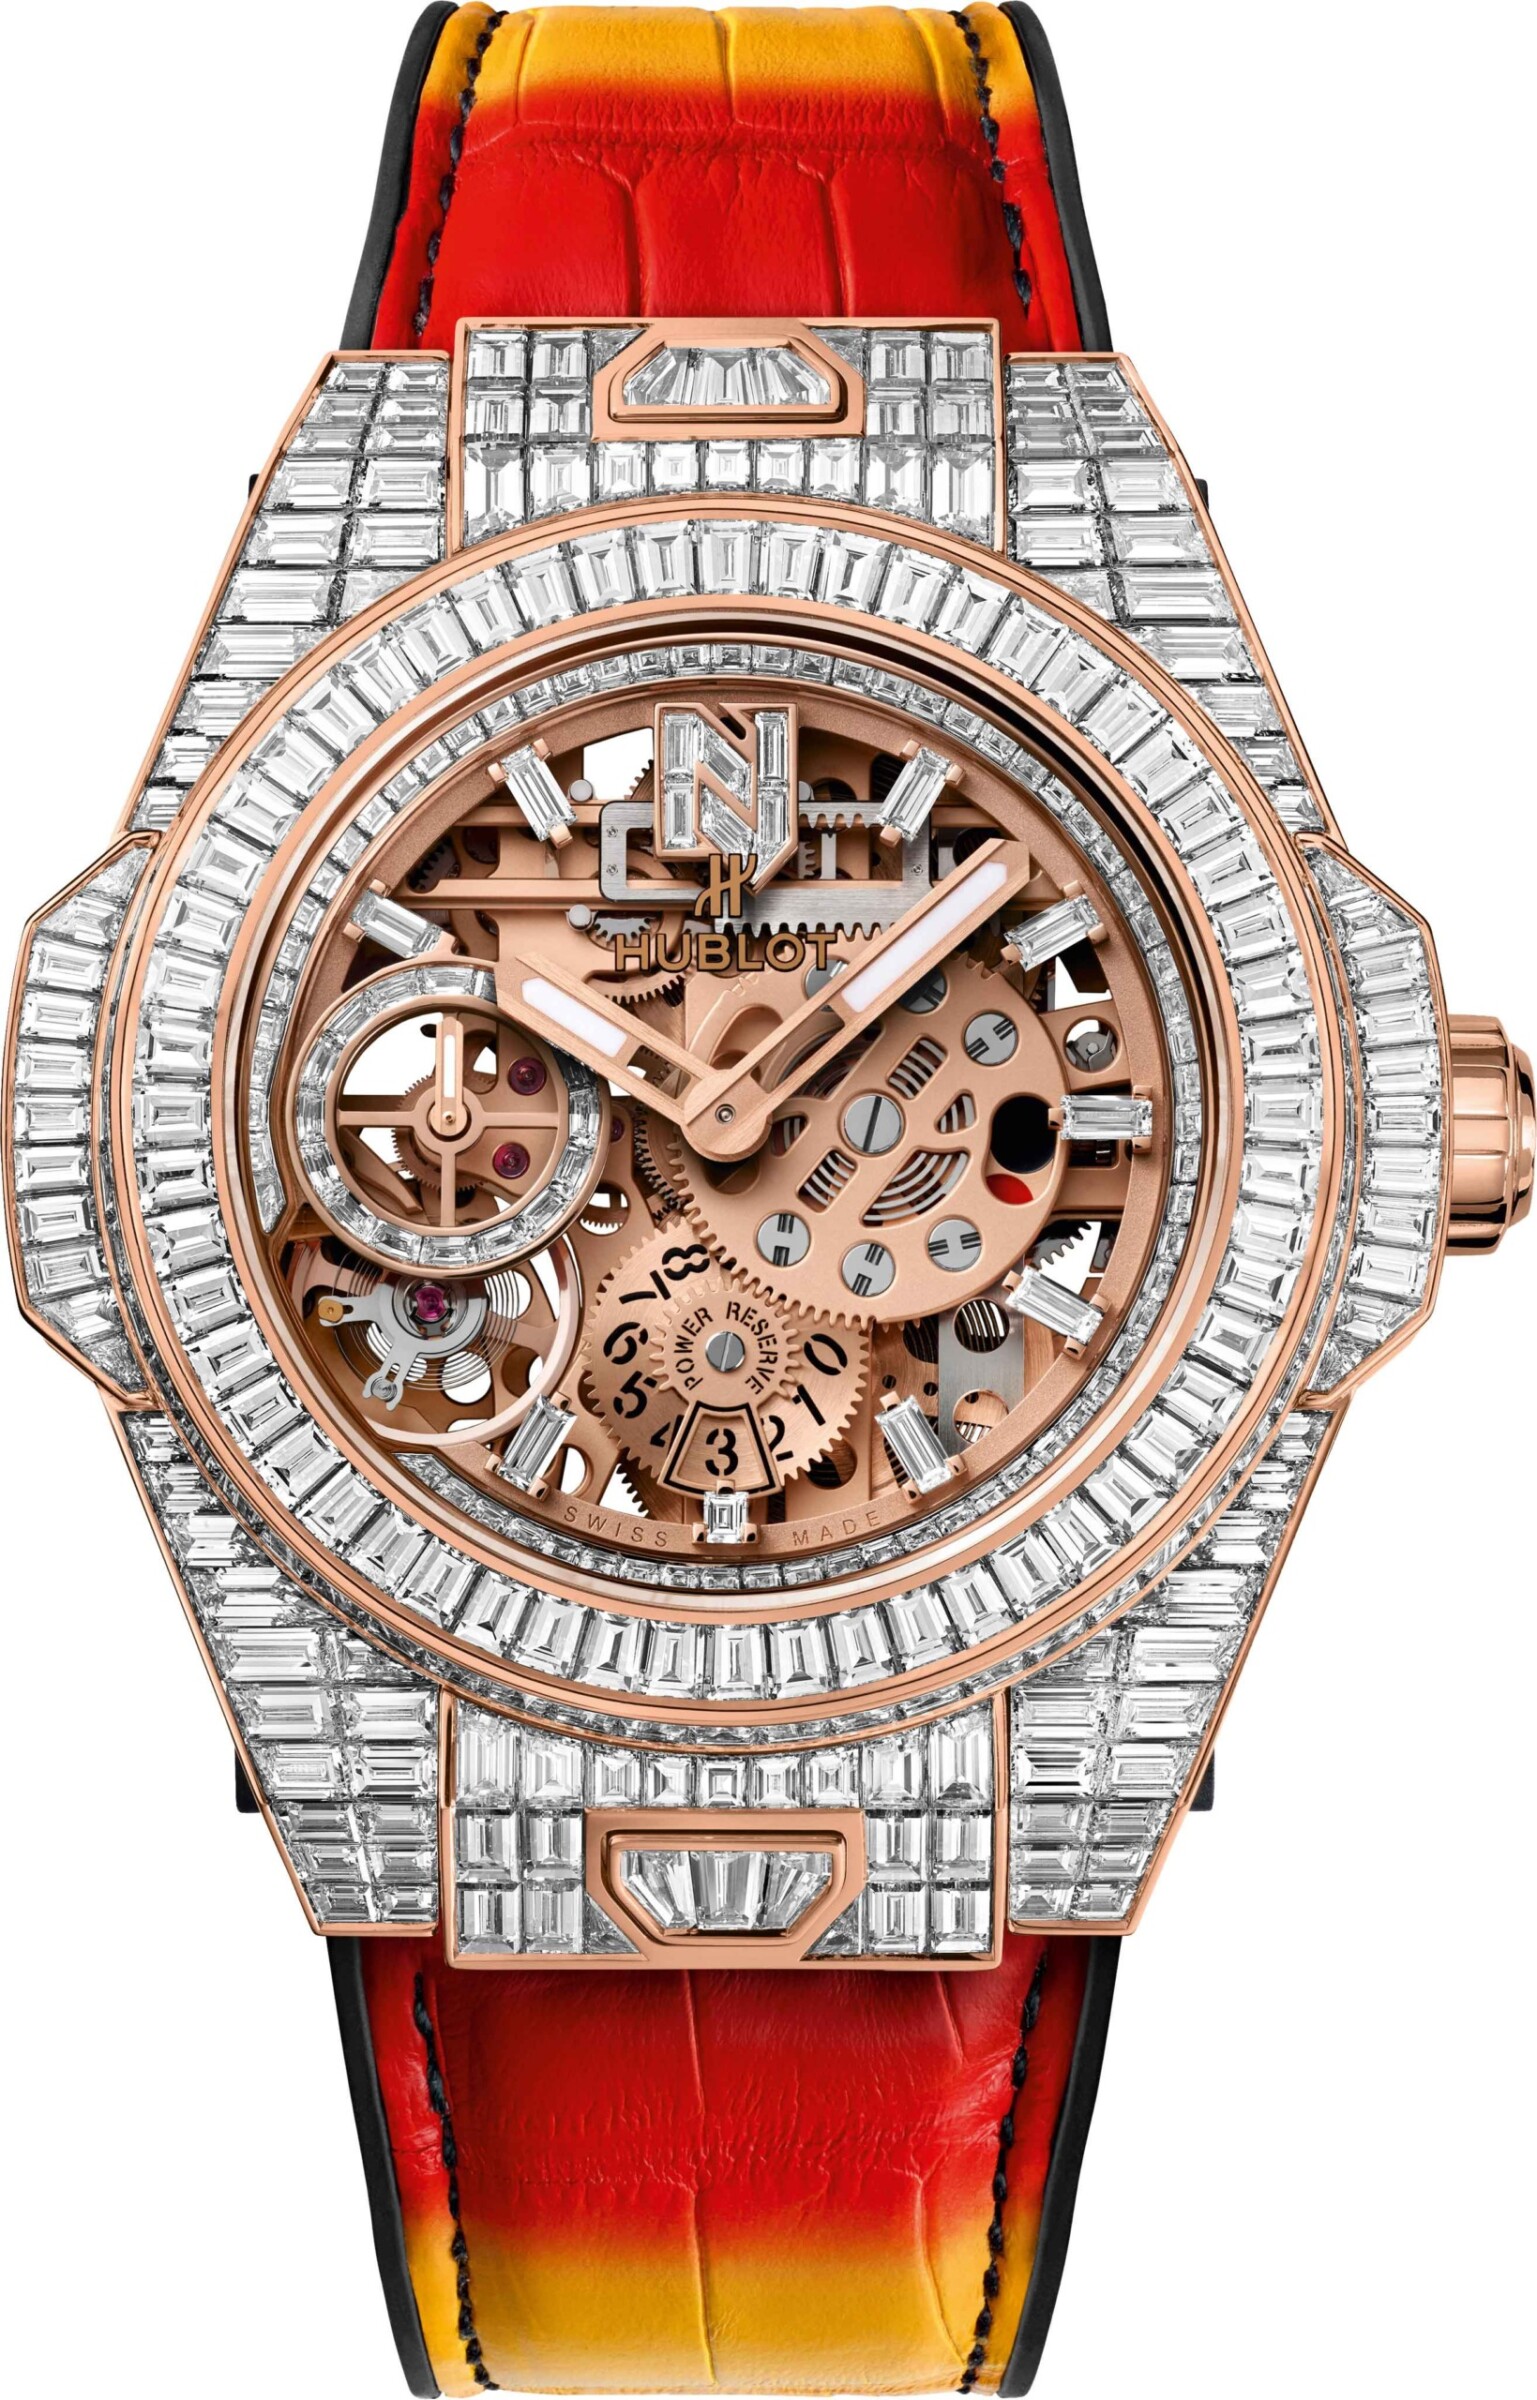 Diese Hublot-Uhr der Spitzenklasse, Modell Big Bang Meca-10 „Nicky Jam“ high Jewellery 45 mm, kostet 350.000,- CHF.